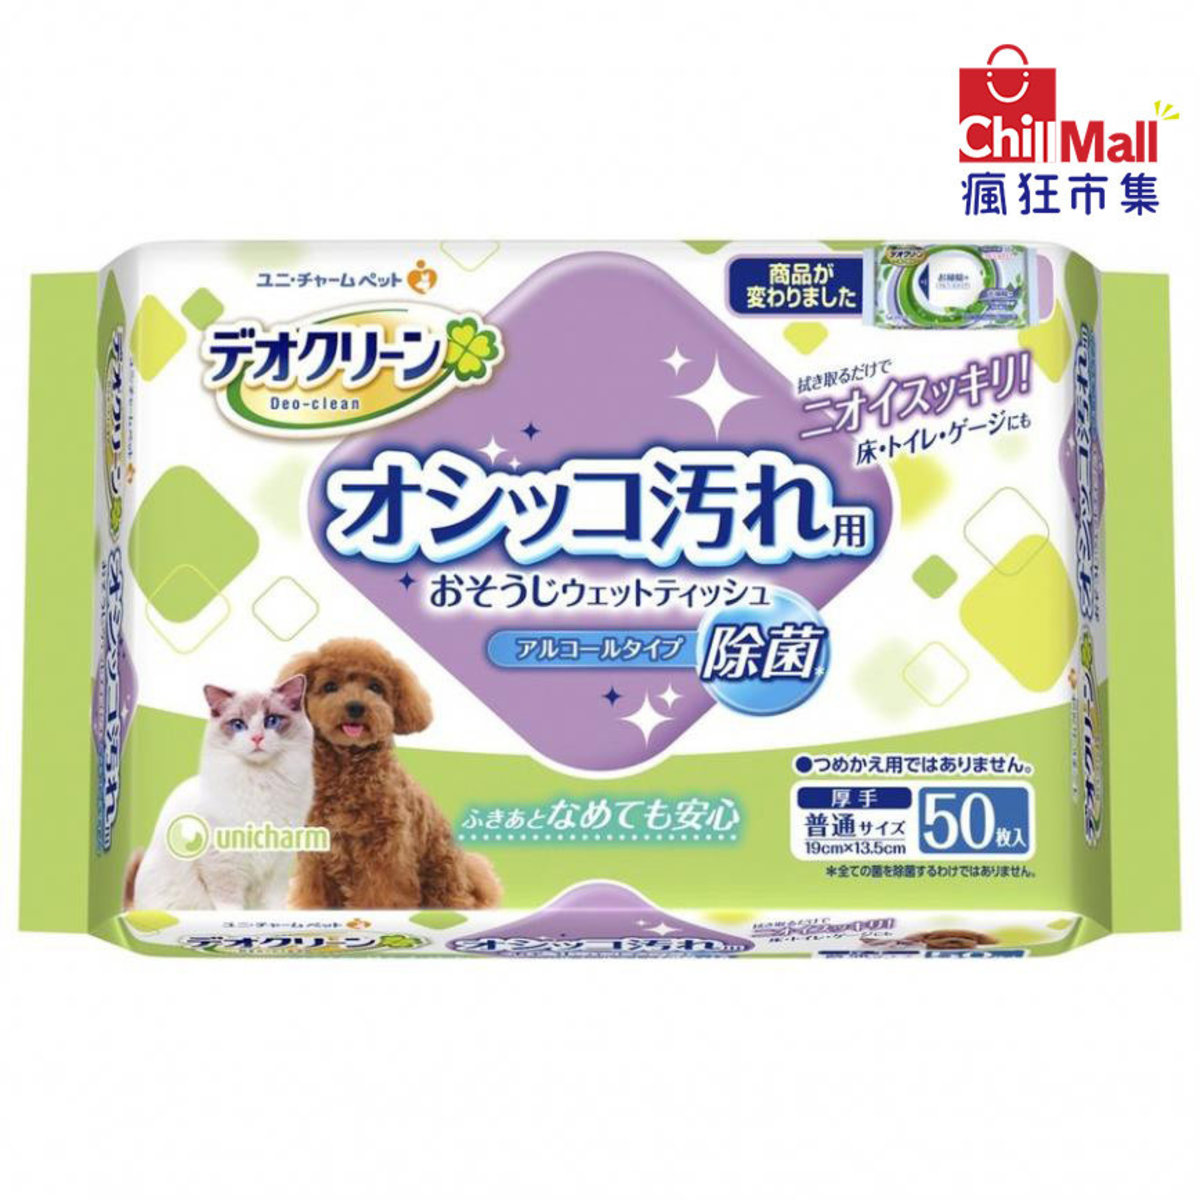 Unicharm 日本清潔尿垢除菌濕紙巾 50枚 (貓犬用) 9655825